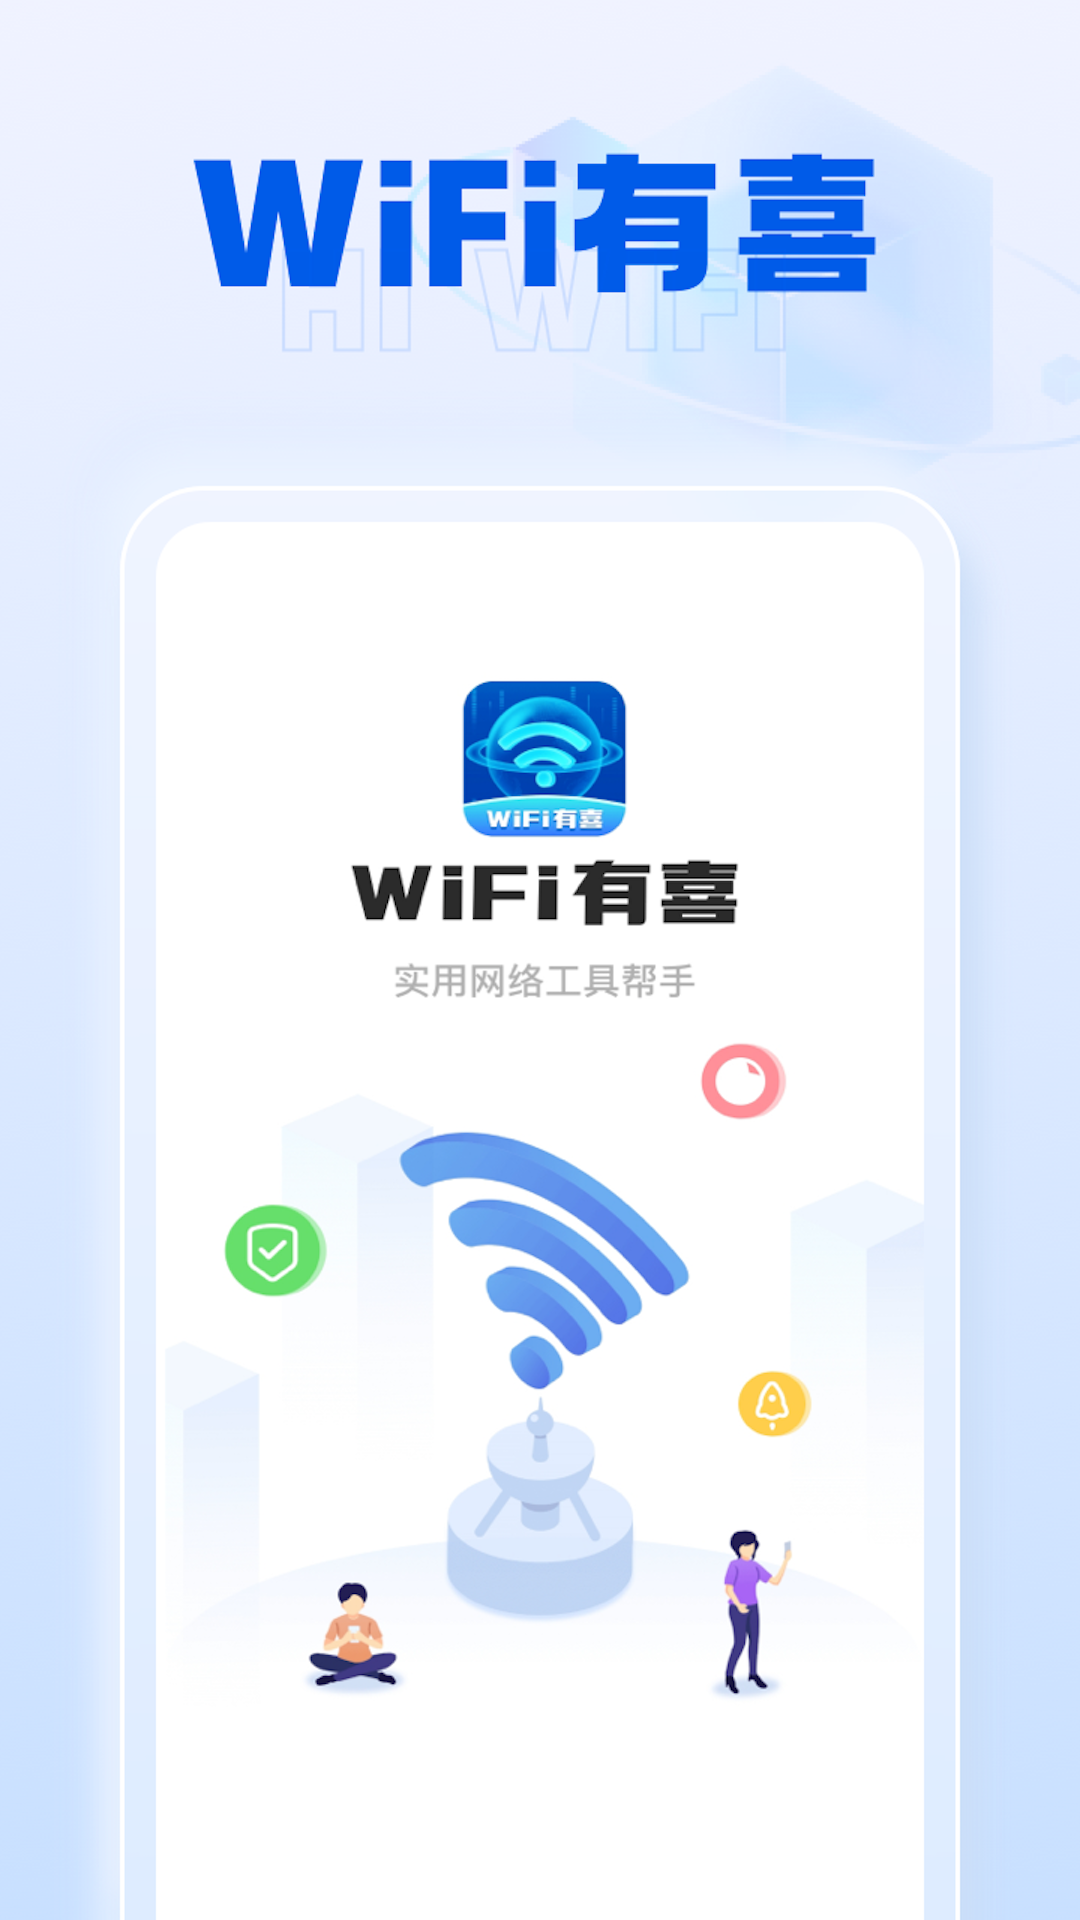 WiFi有喜网络测速APP官方版图1